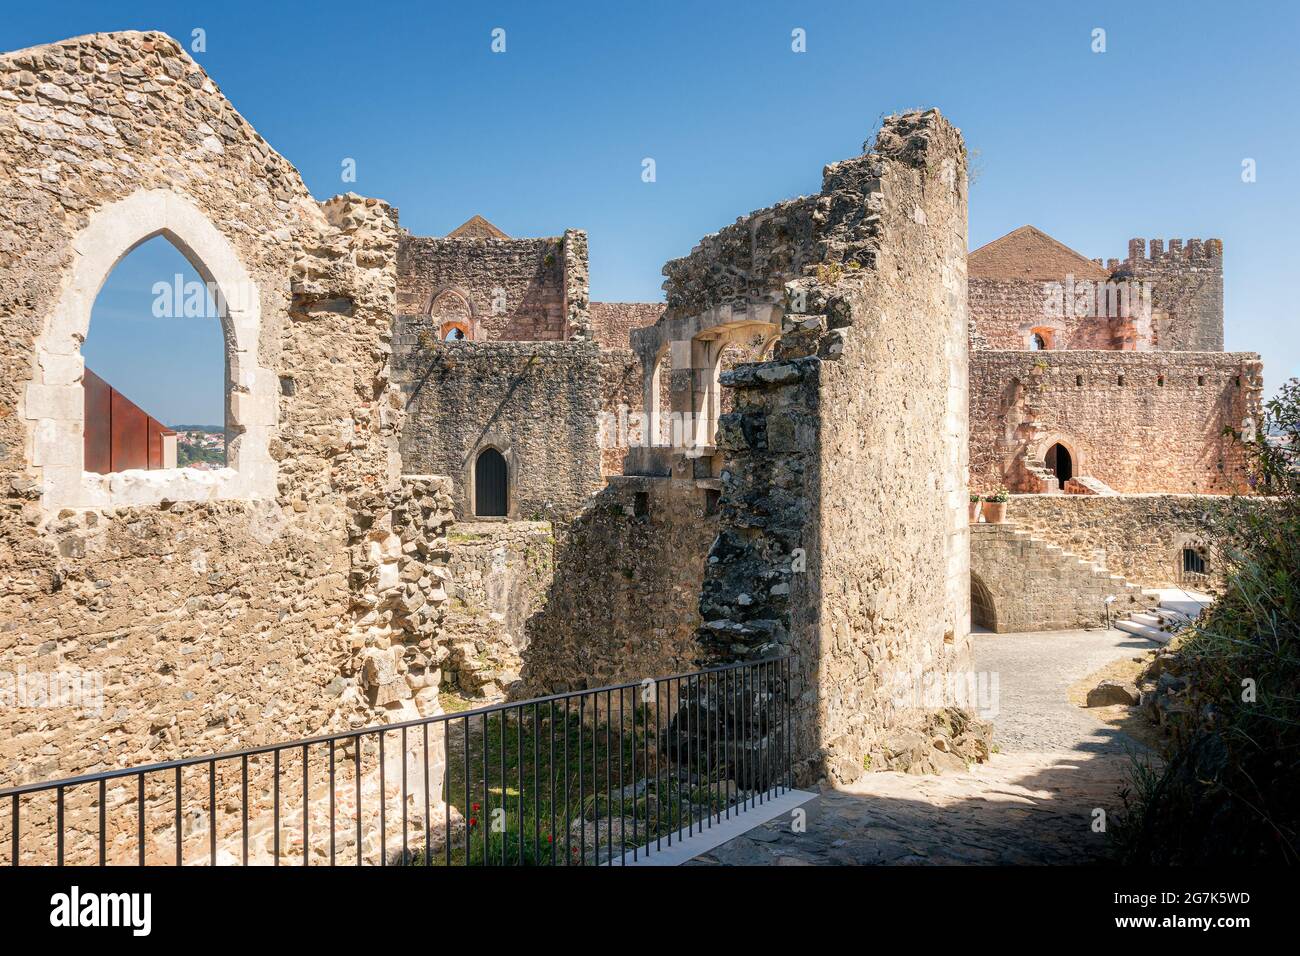 Leiria, Portugal - 25 mai 2021 : vue intérieure du château de Leiria au Portugal. Banque D'Images